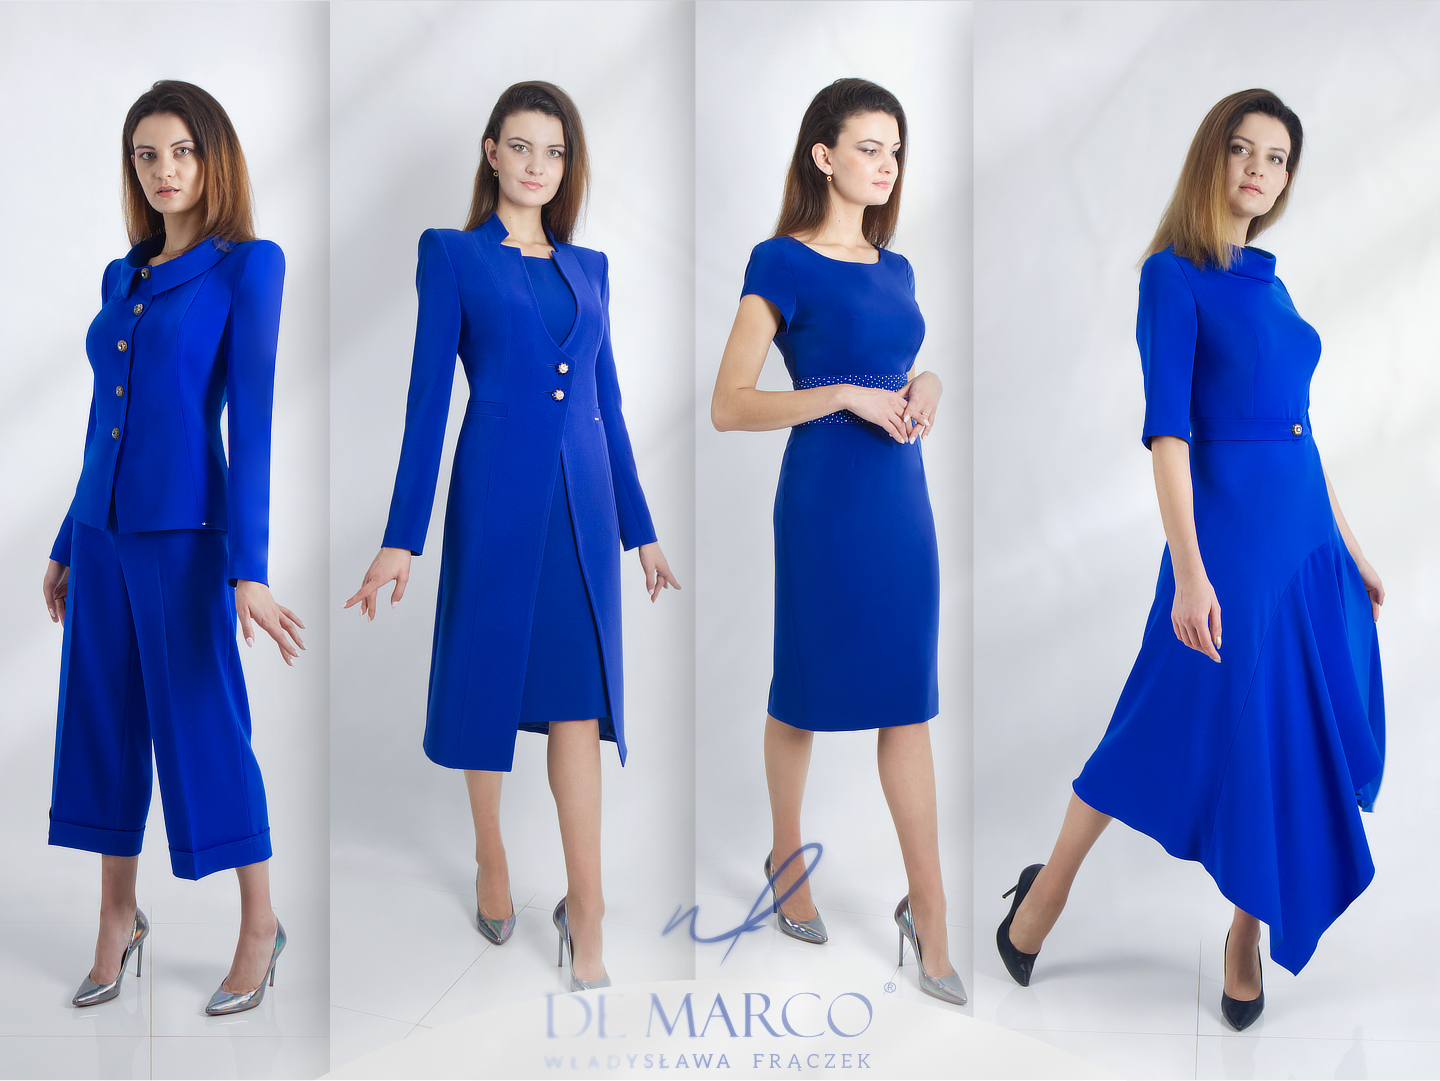 Luxus-Damenbekleidung Online Shop De Marco formales Styling